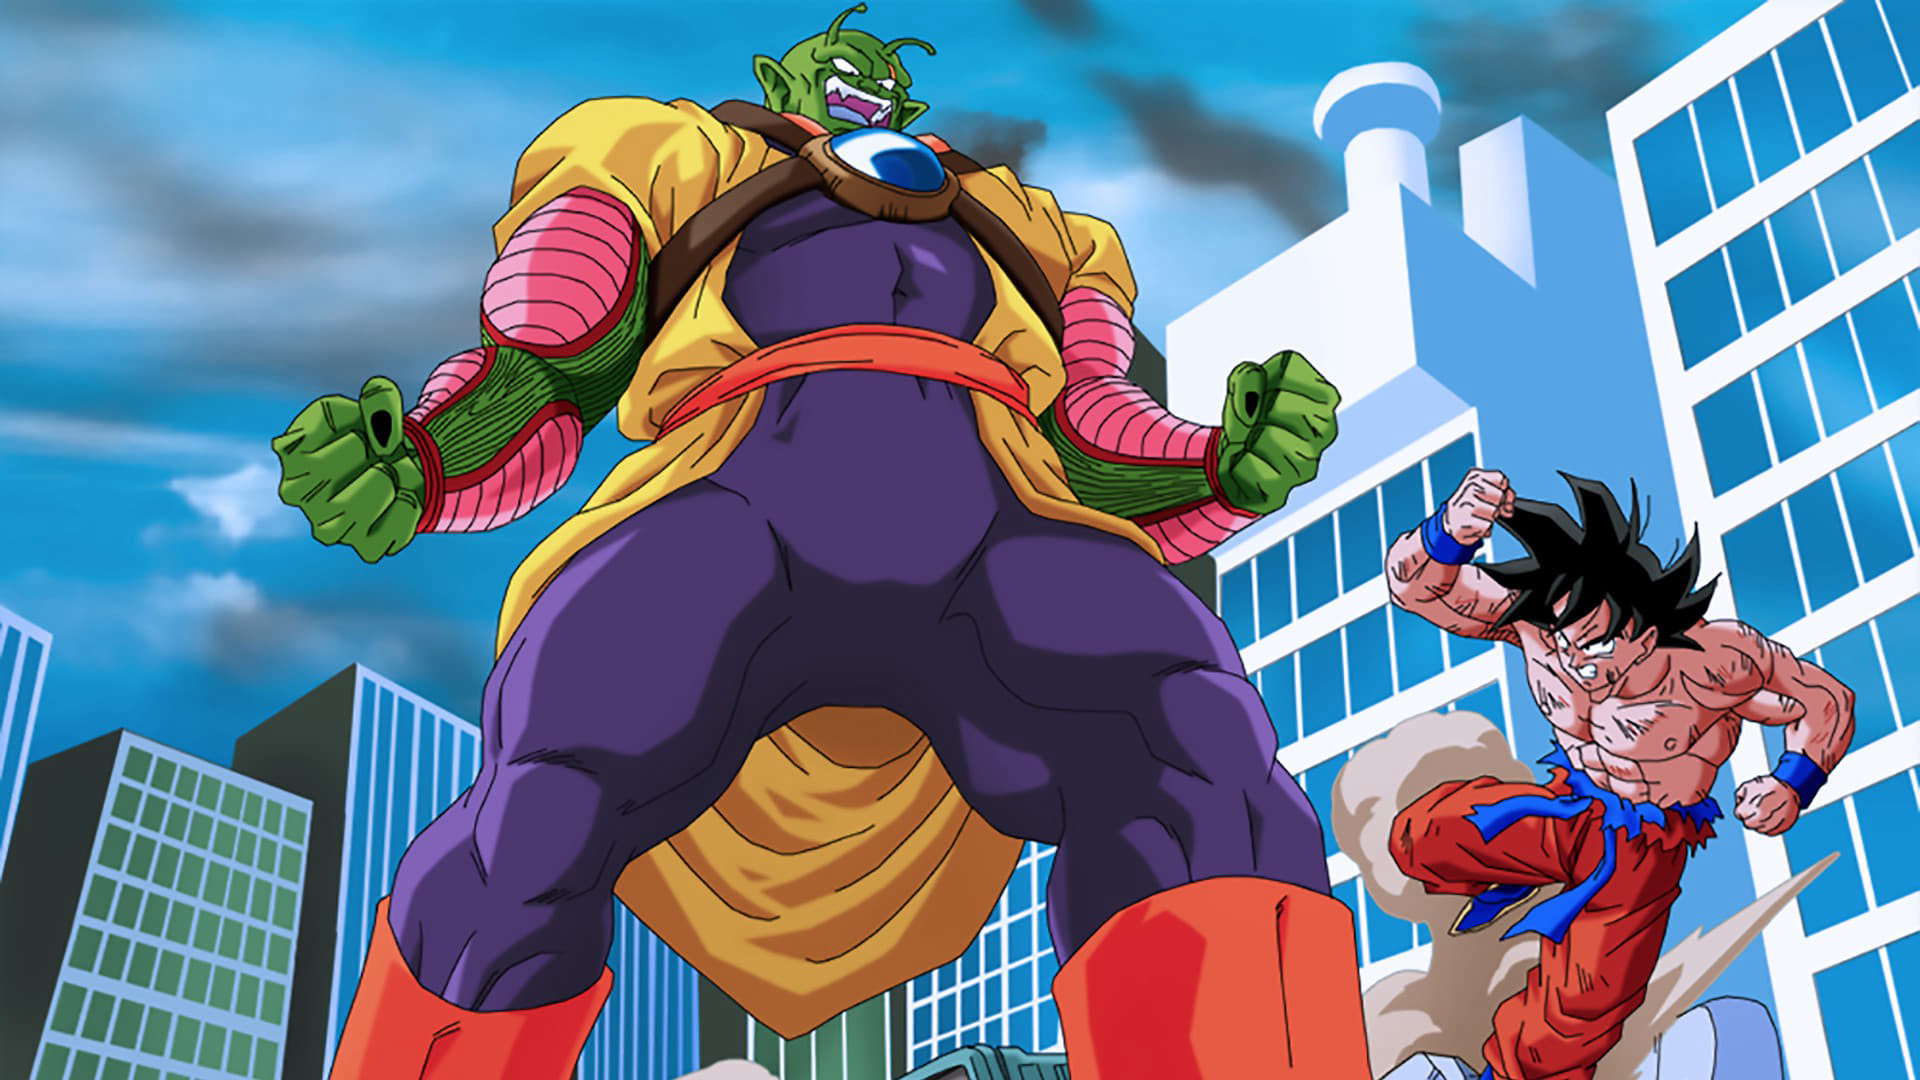 Dragon Ball Z Broly – The Legendary Super Saiyan / Dragon Ball Z Broly – The Legendary Super Saiyan (1993)